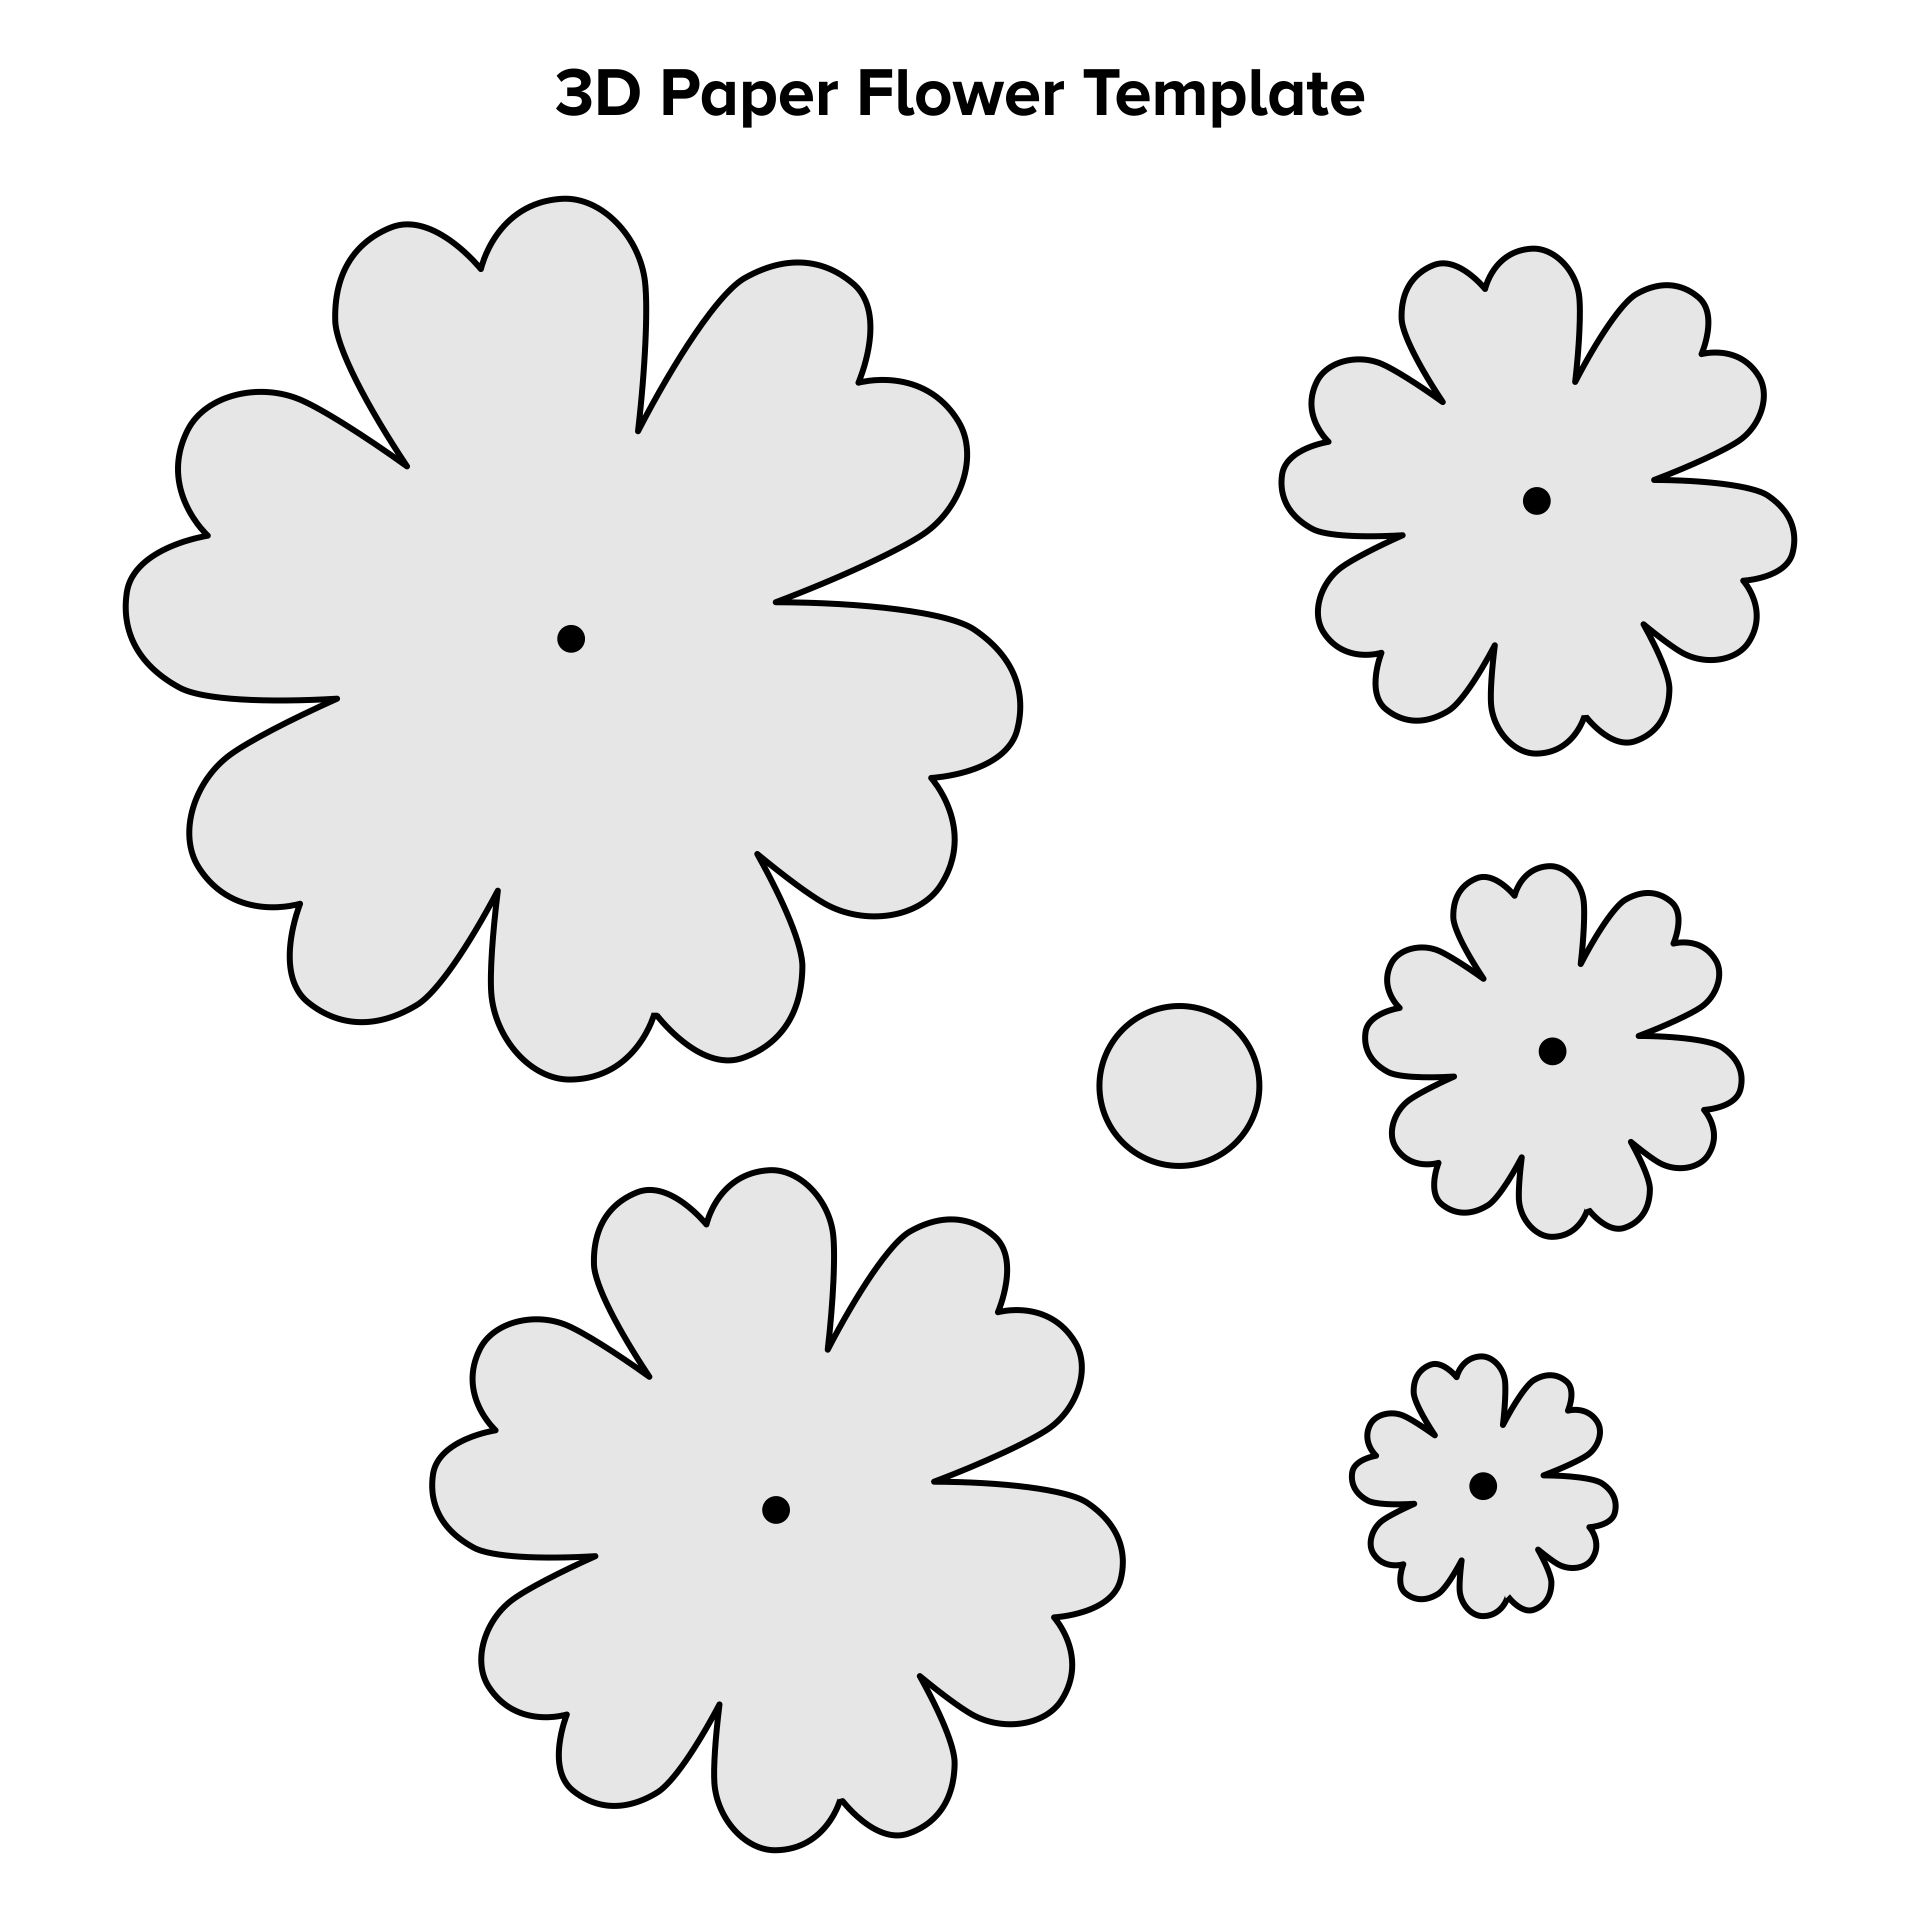 3D Paper Flower Template Printable